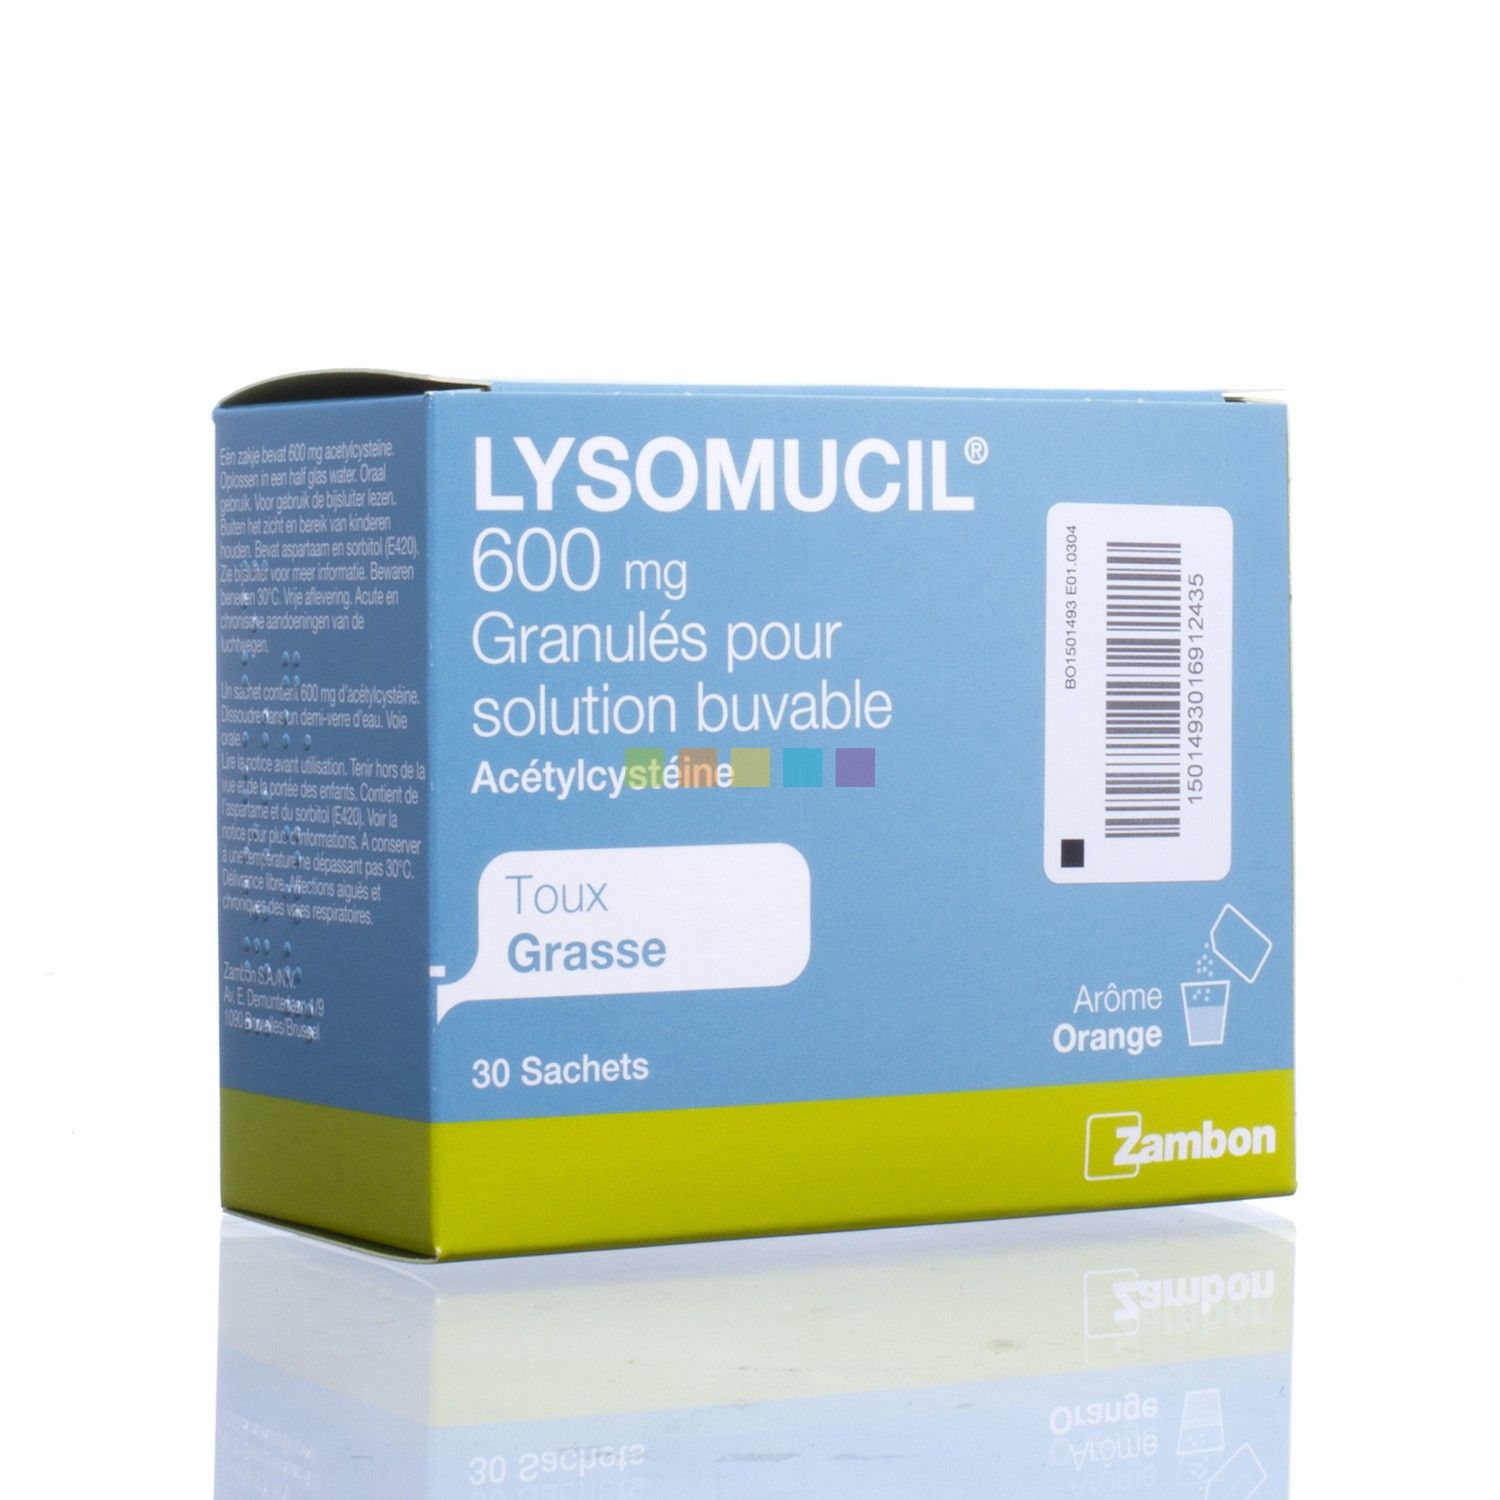 Lysomucil - image 0